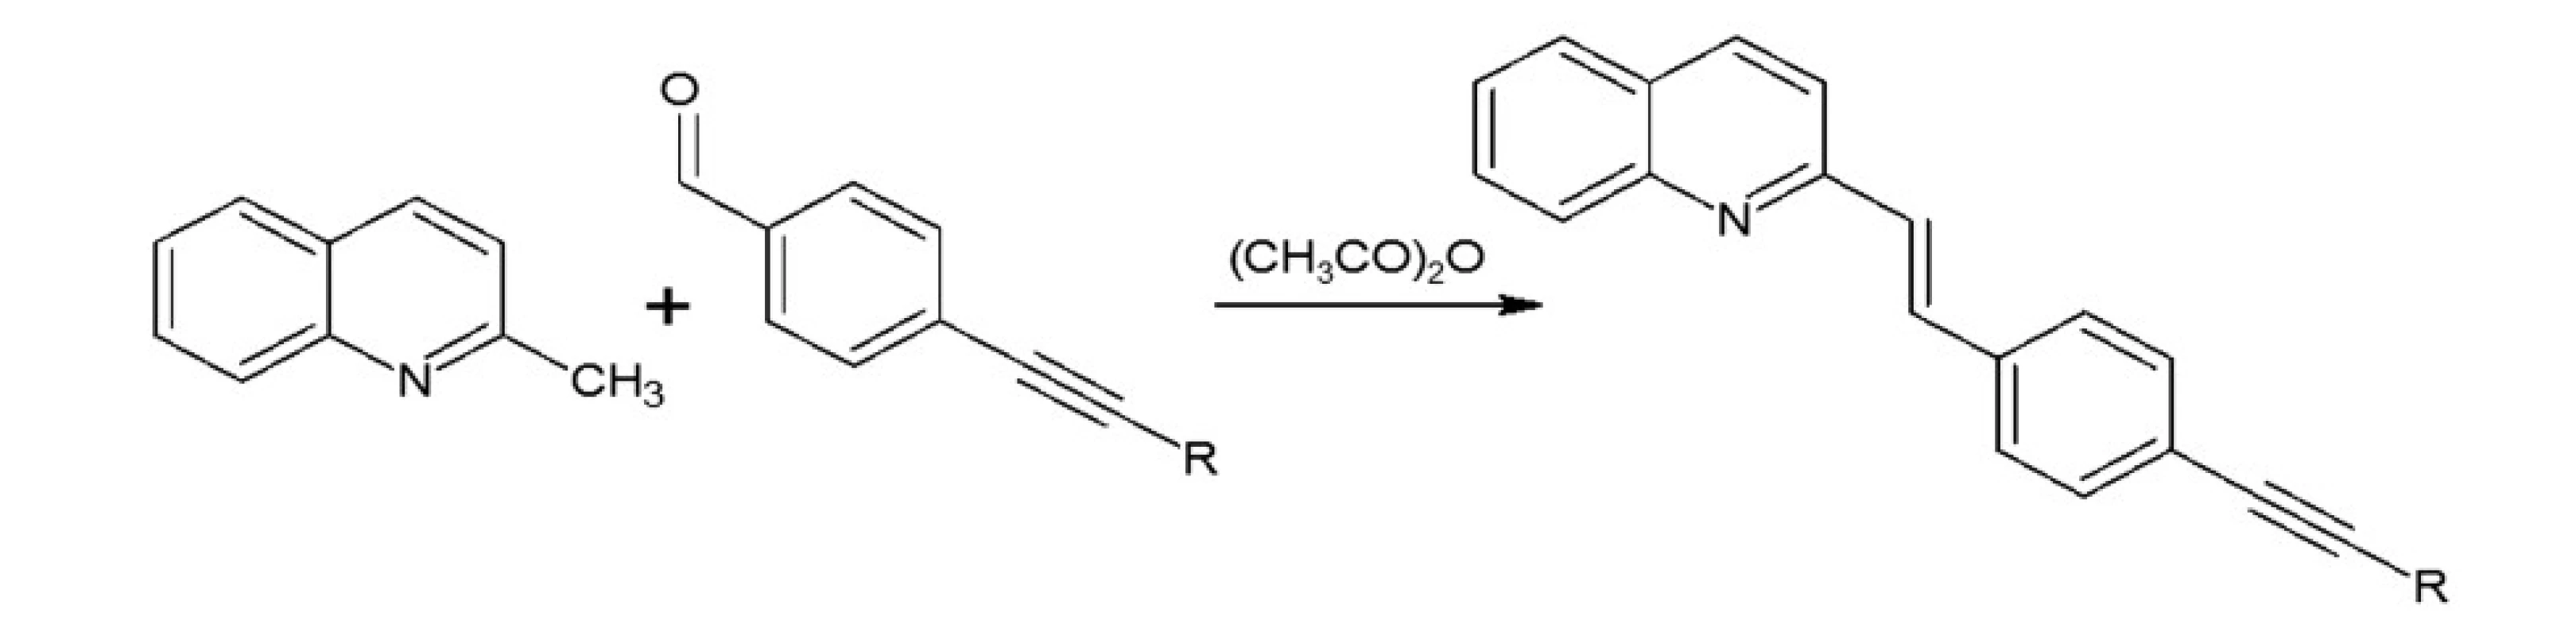 Synthesis of styrylquinoline